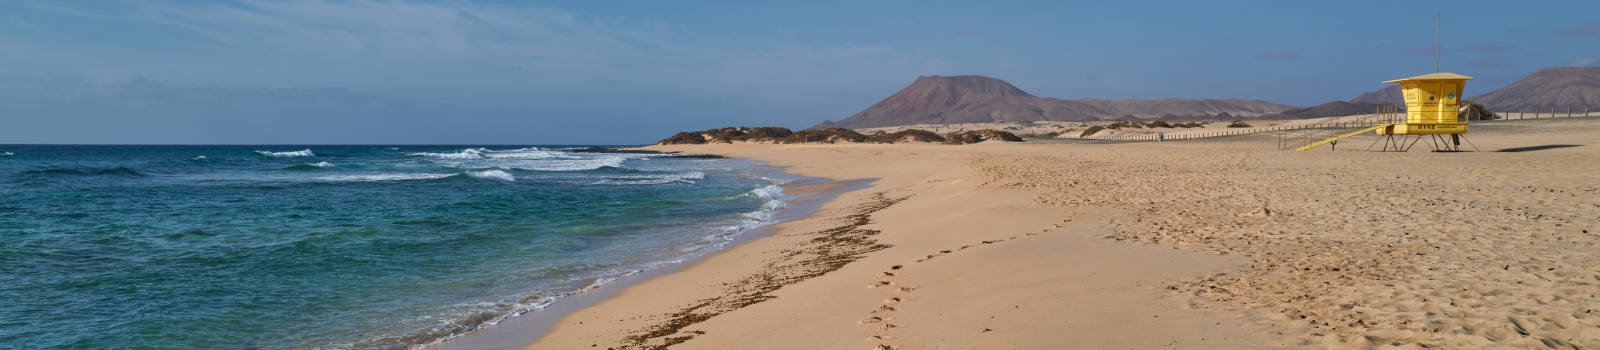 Die Strände Fuerteventuras: Playa del Moro.